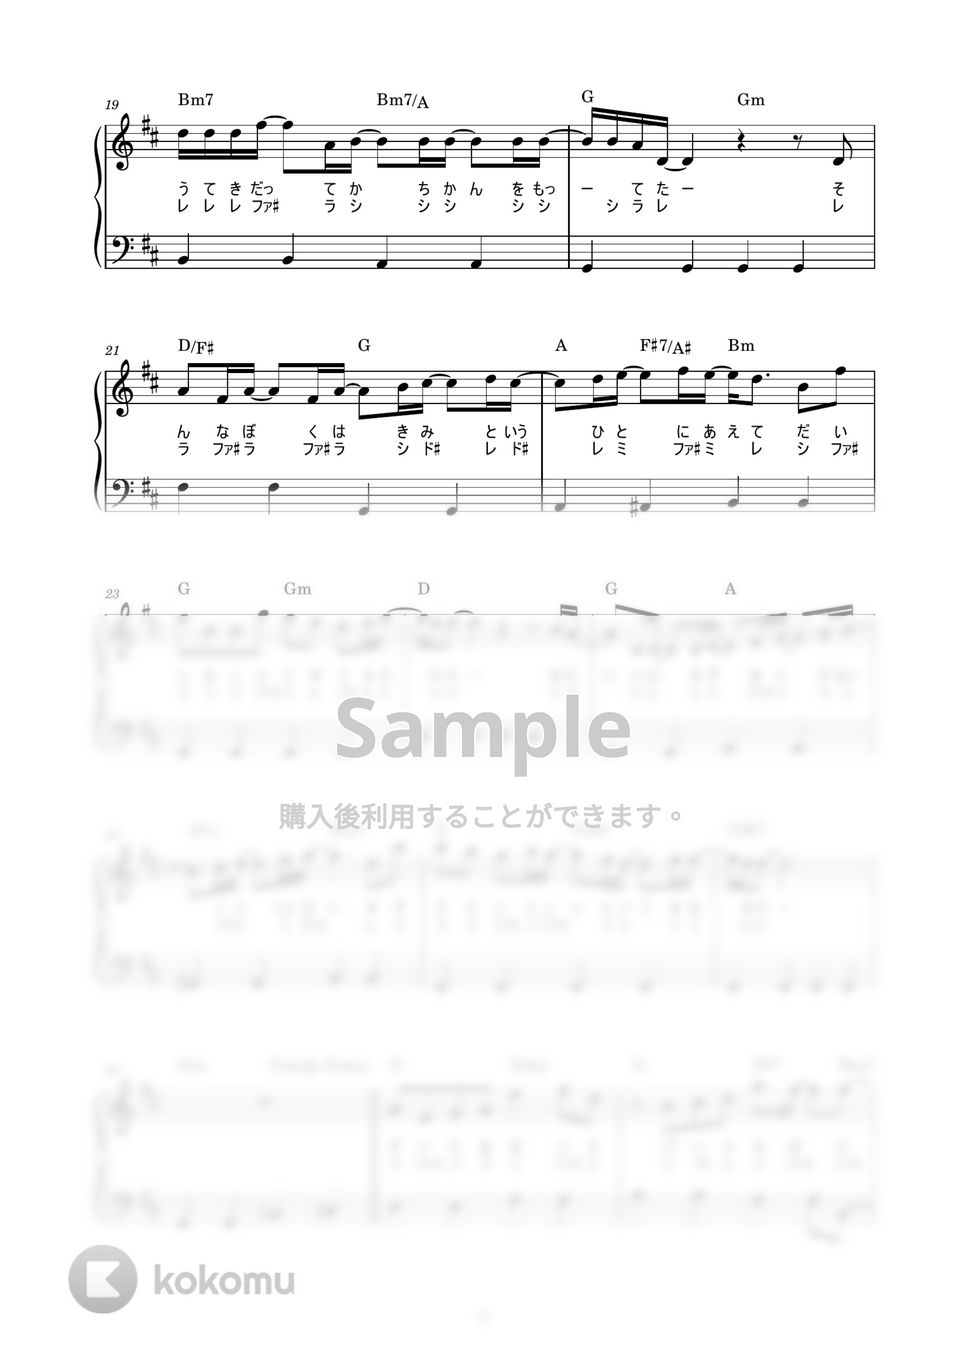 Official髭男dism - ビンテージ (かんたん / 歌詞付き / ドレミ付き / 初心者) by piano.tokyo